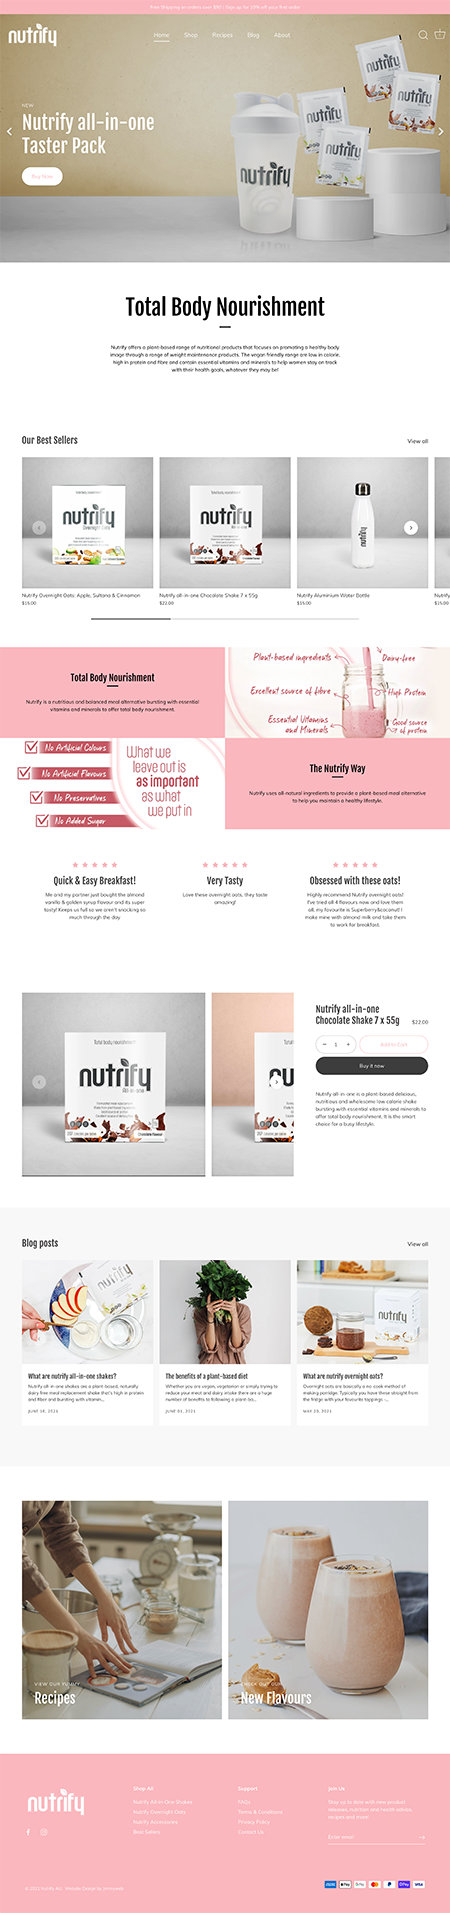 Nutrify Australia - Web Design Case Study